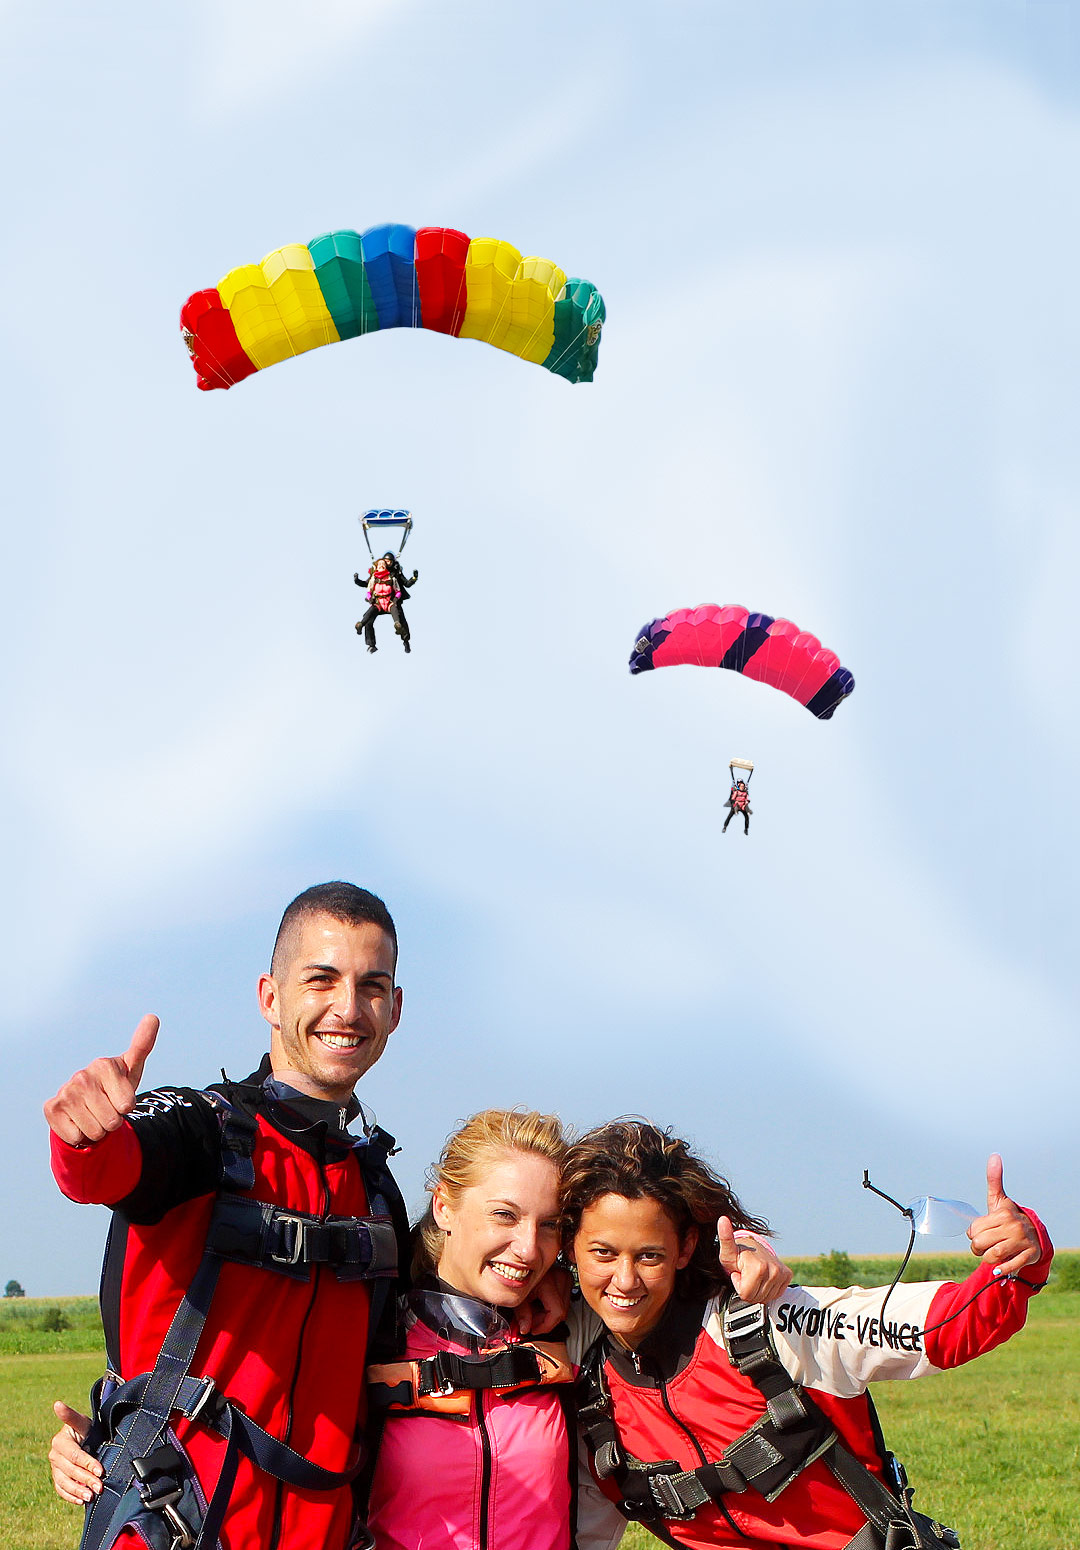 Recensioni lancio paracadute biposto istruttore